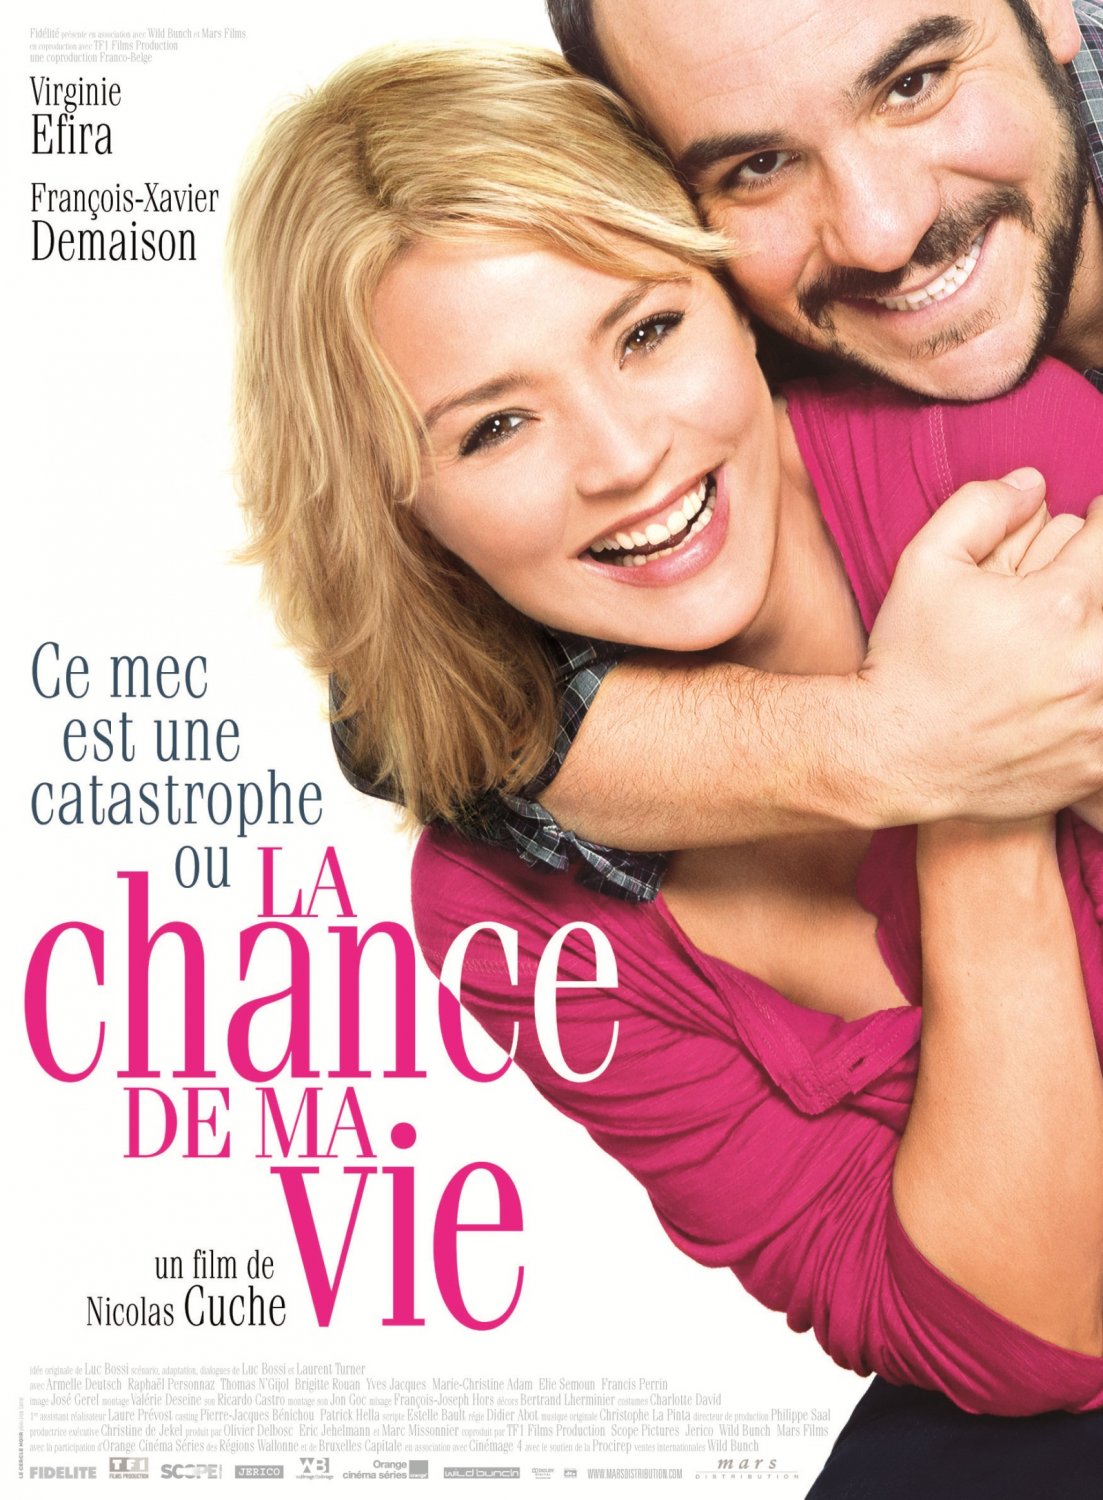 Extra Large Movie Poster Image for La chance de ma vie 